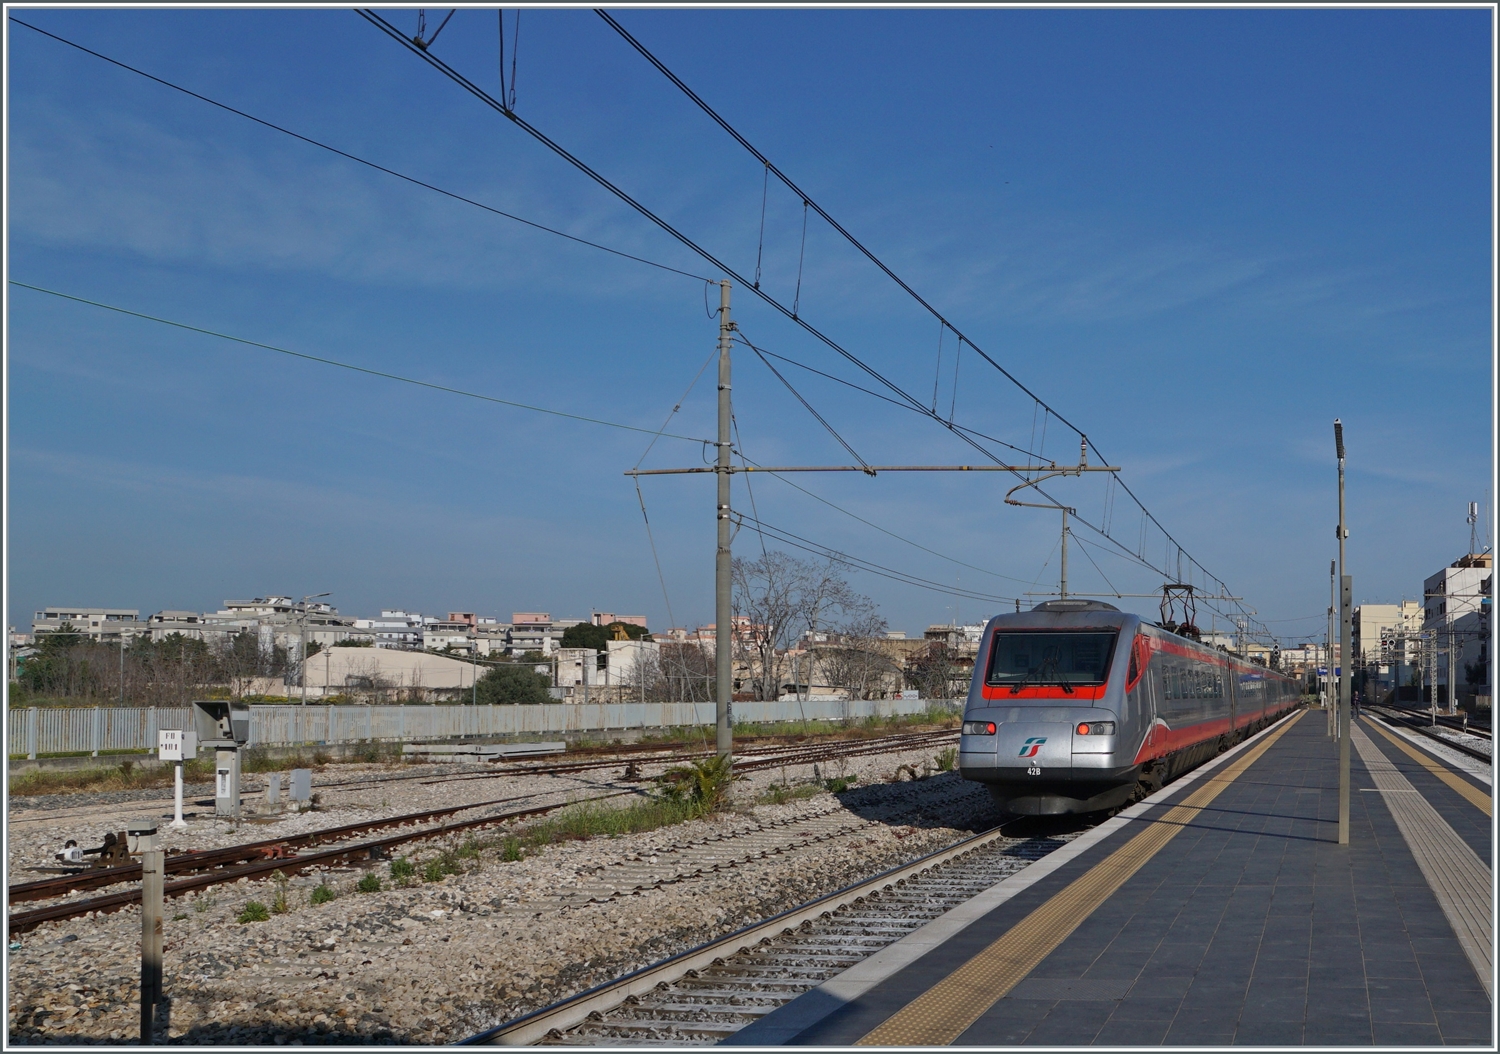 Der FS Treniatlia ETR 485 042 fährt i Trani durch. Das Ziel des Zuges ist Roma Termini. 

22. April 2023